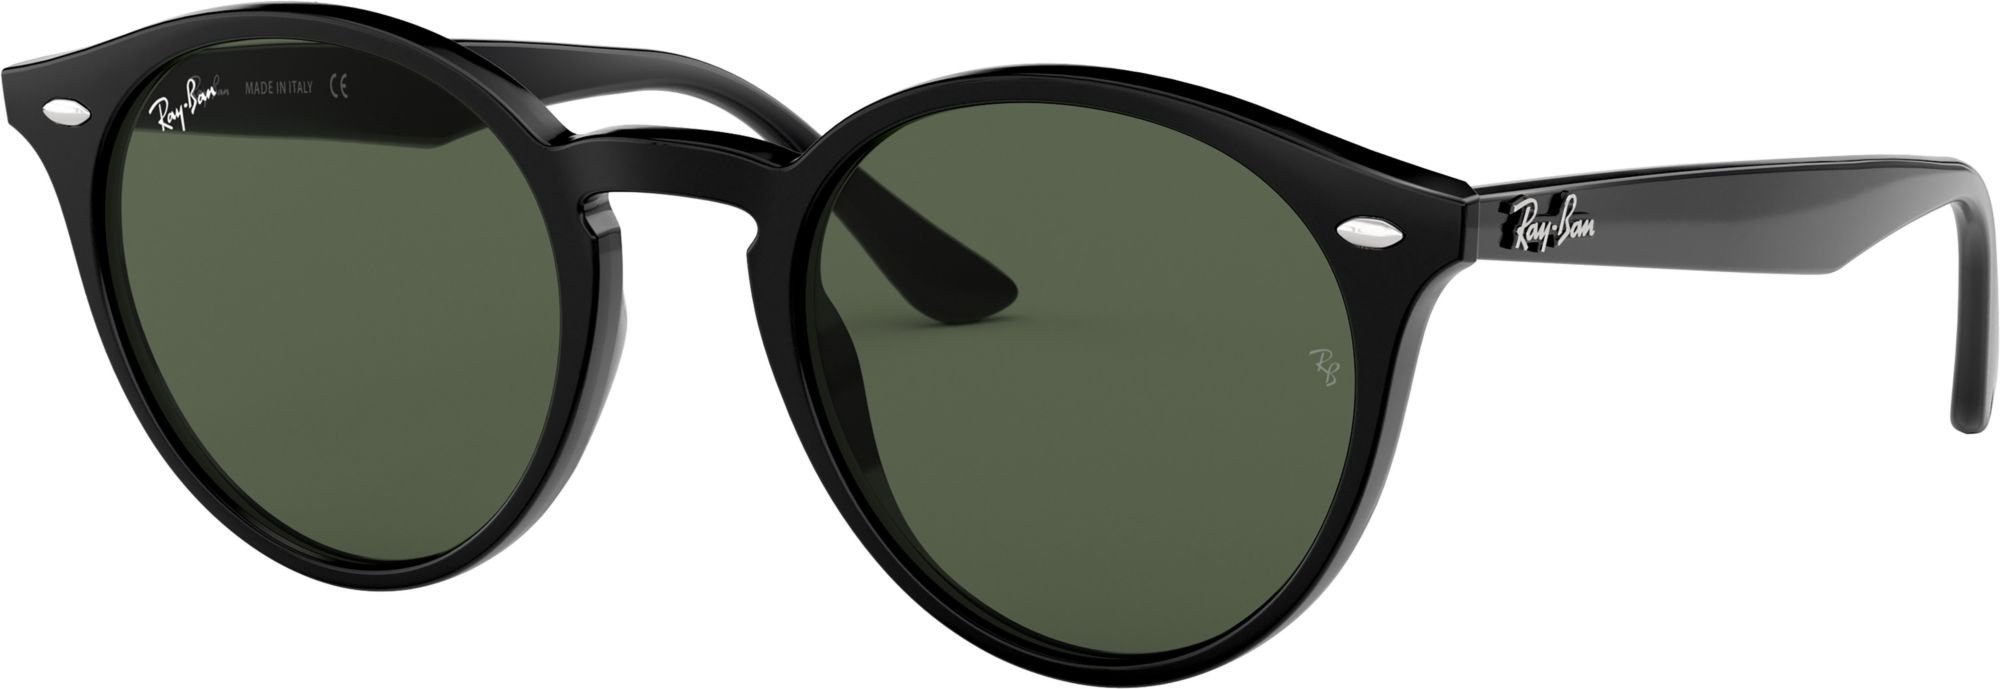 Photos - Sunglasses Ray-Ban 2180 , Men's, Black/Green 20RYBURB2180BLKCLSGS 